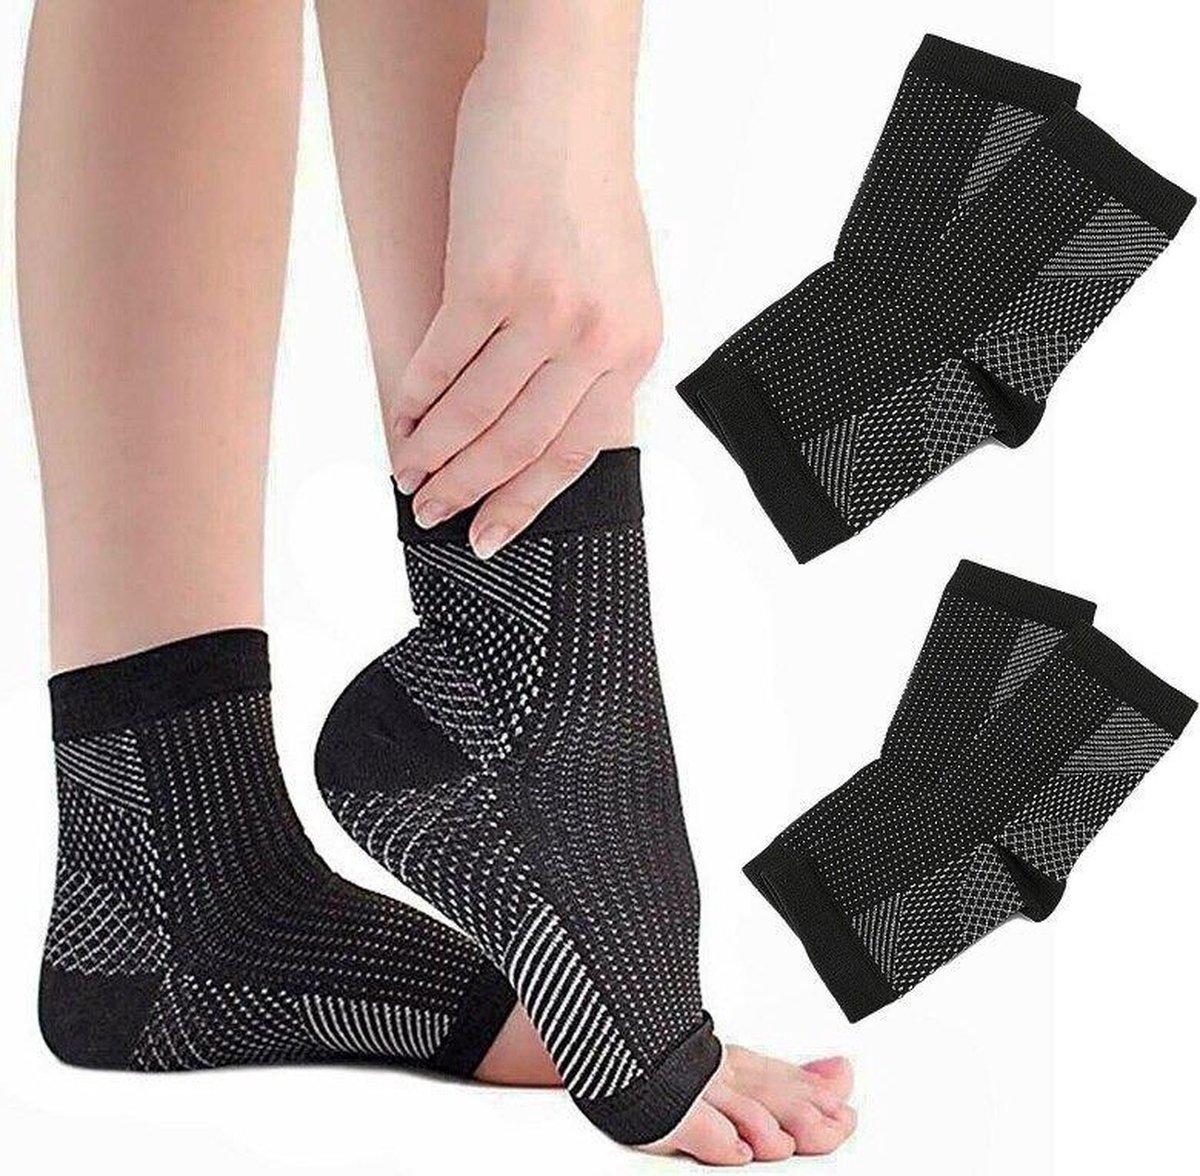 Medicca - Enkel Brace - Voet Brace - Ondersteunende Sokken - Orthopedische Enkel Ondersteuning - Enkel Bandage Sokken